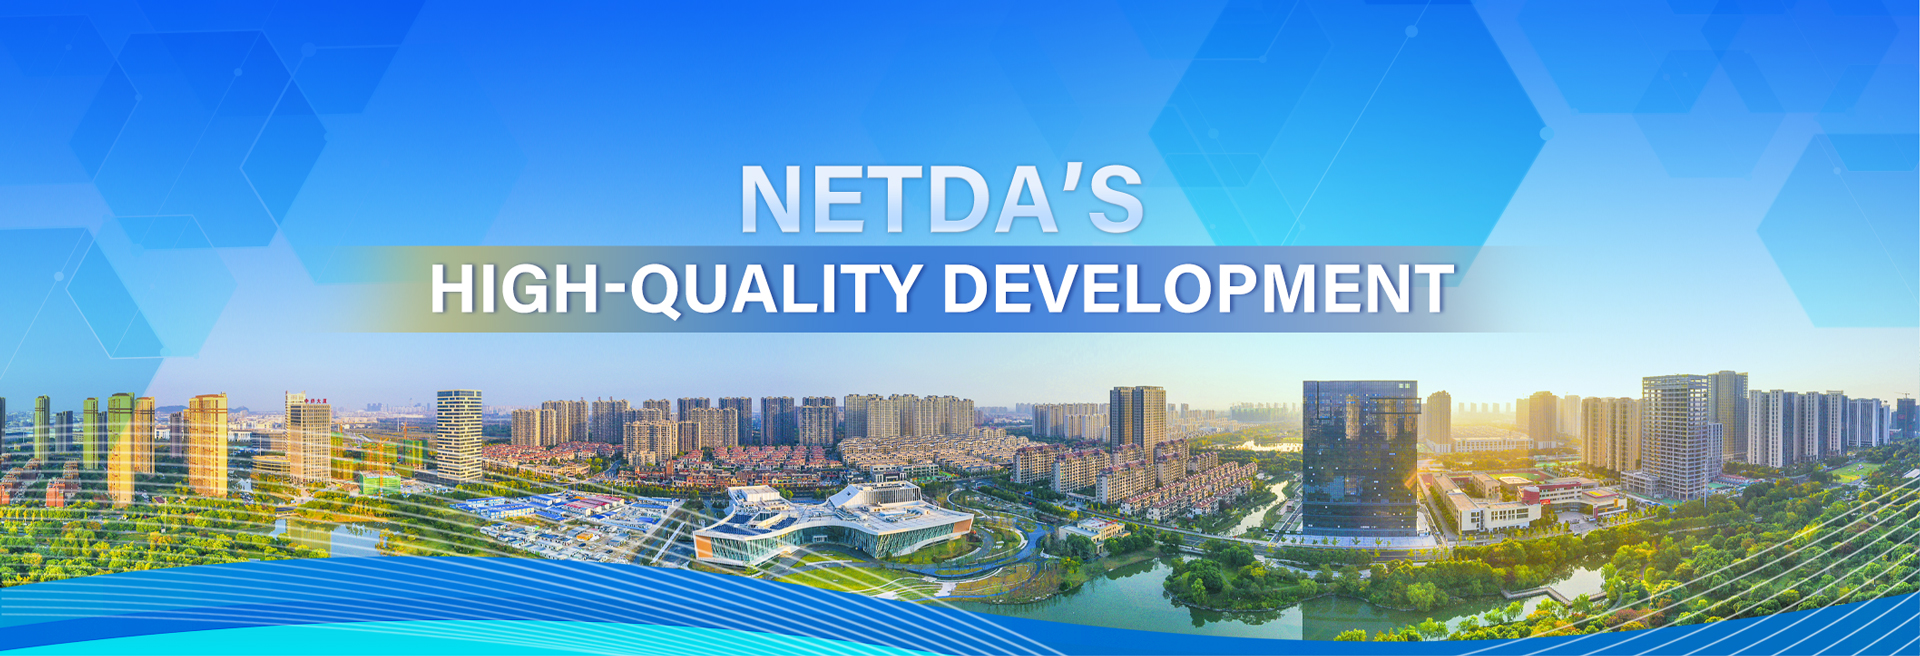 NETDA's high-quality development